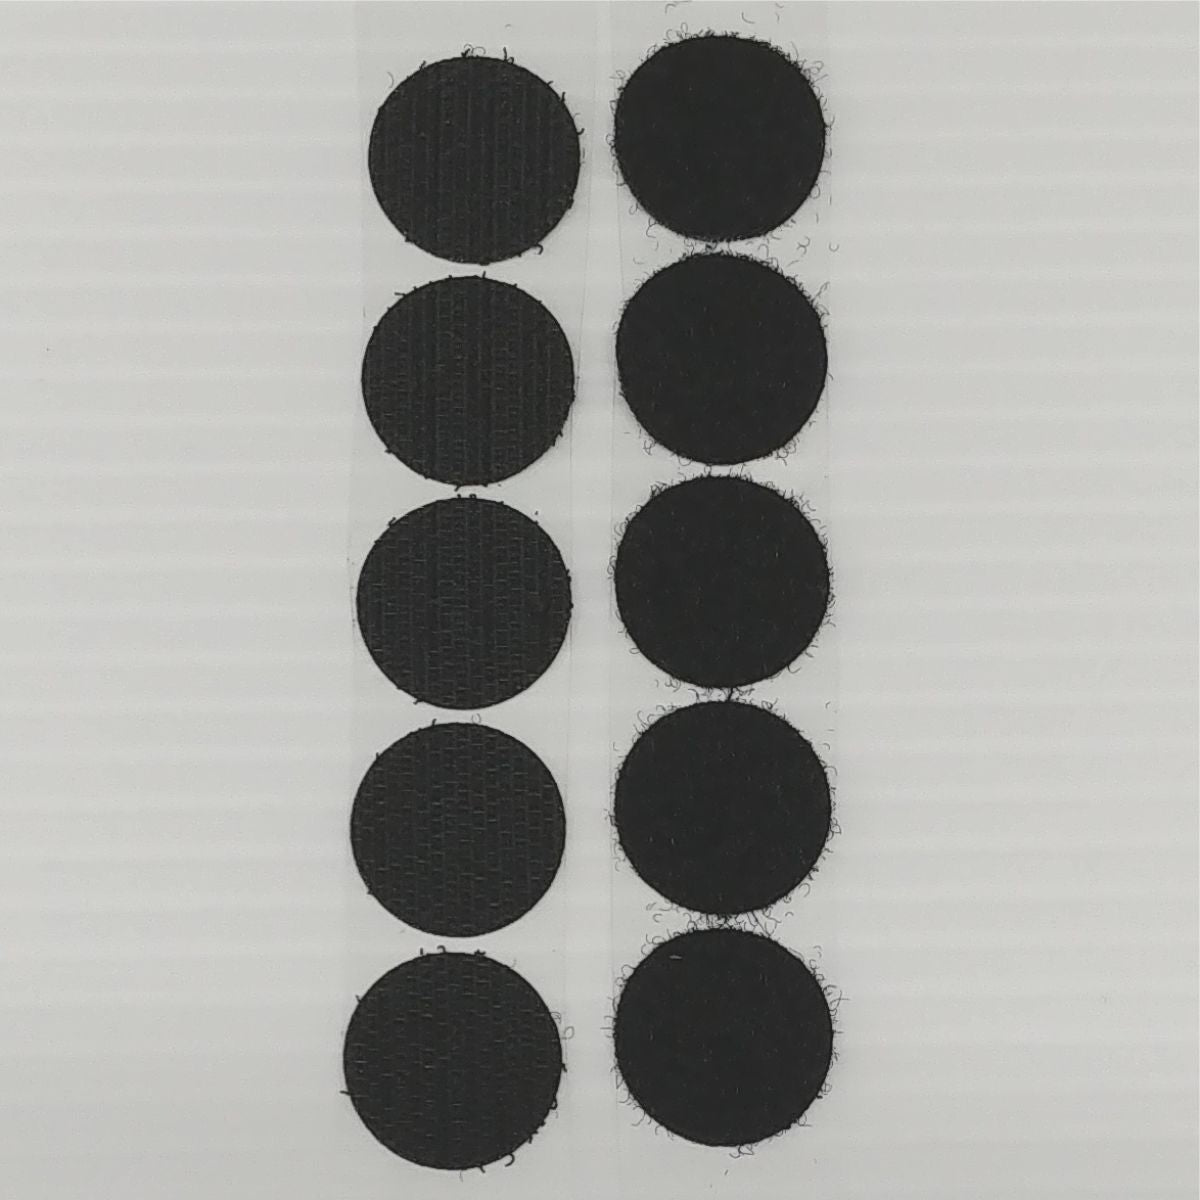 Self Adhesive Dots 5 Pack-Black - CraftCutterSupply.com